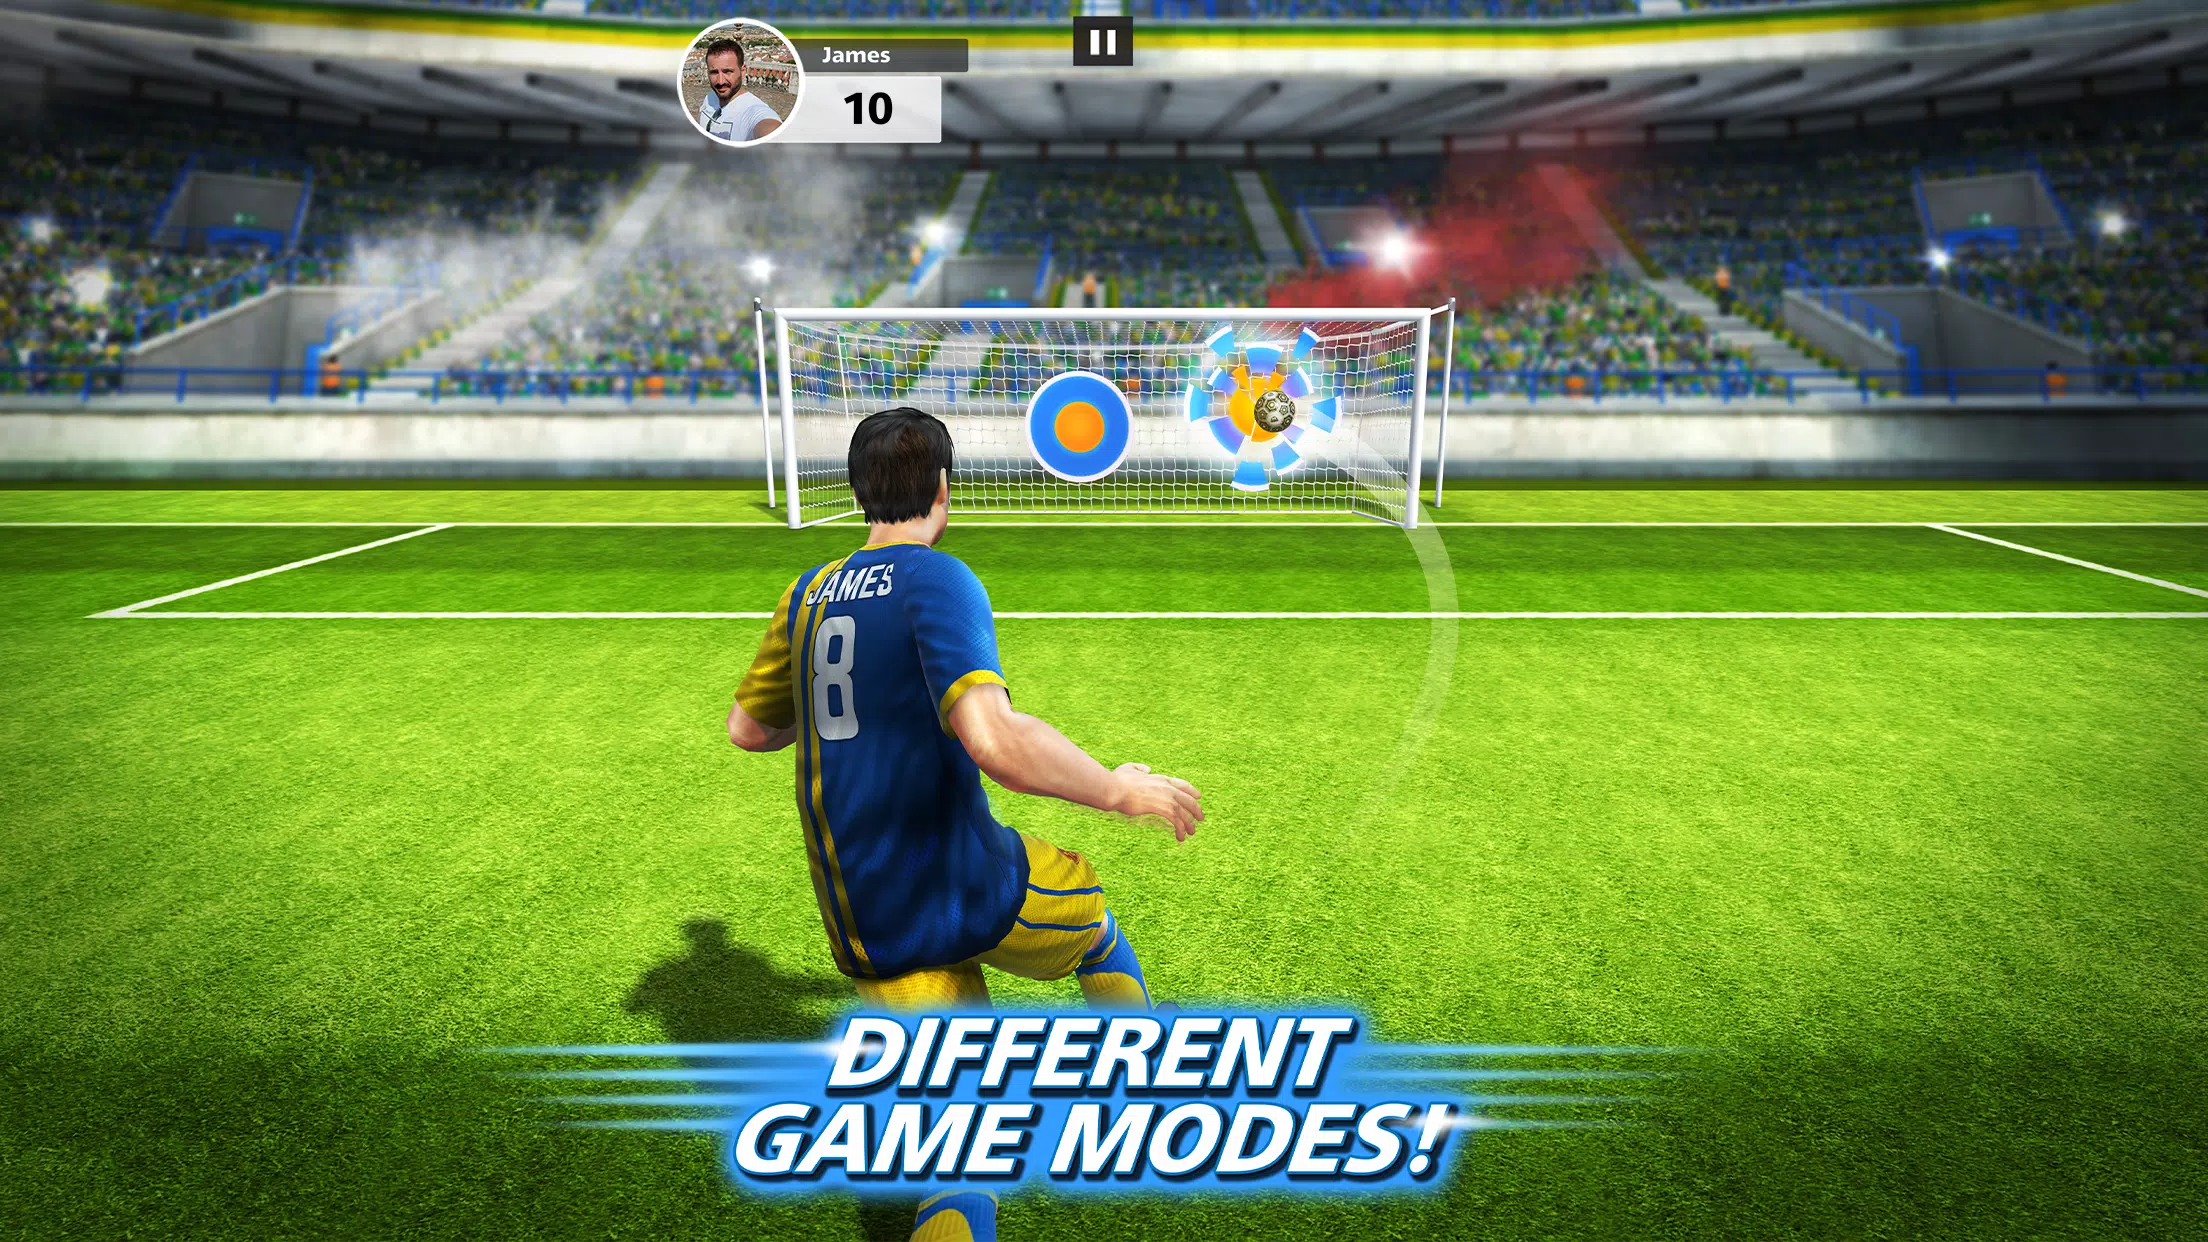 Football Strike: Online Soccer Apk Download for Android- Latest version  1.45.2- com.miniclip.footballstrike